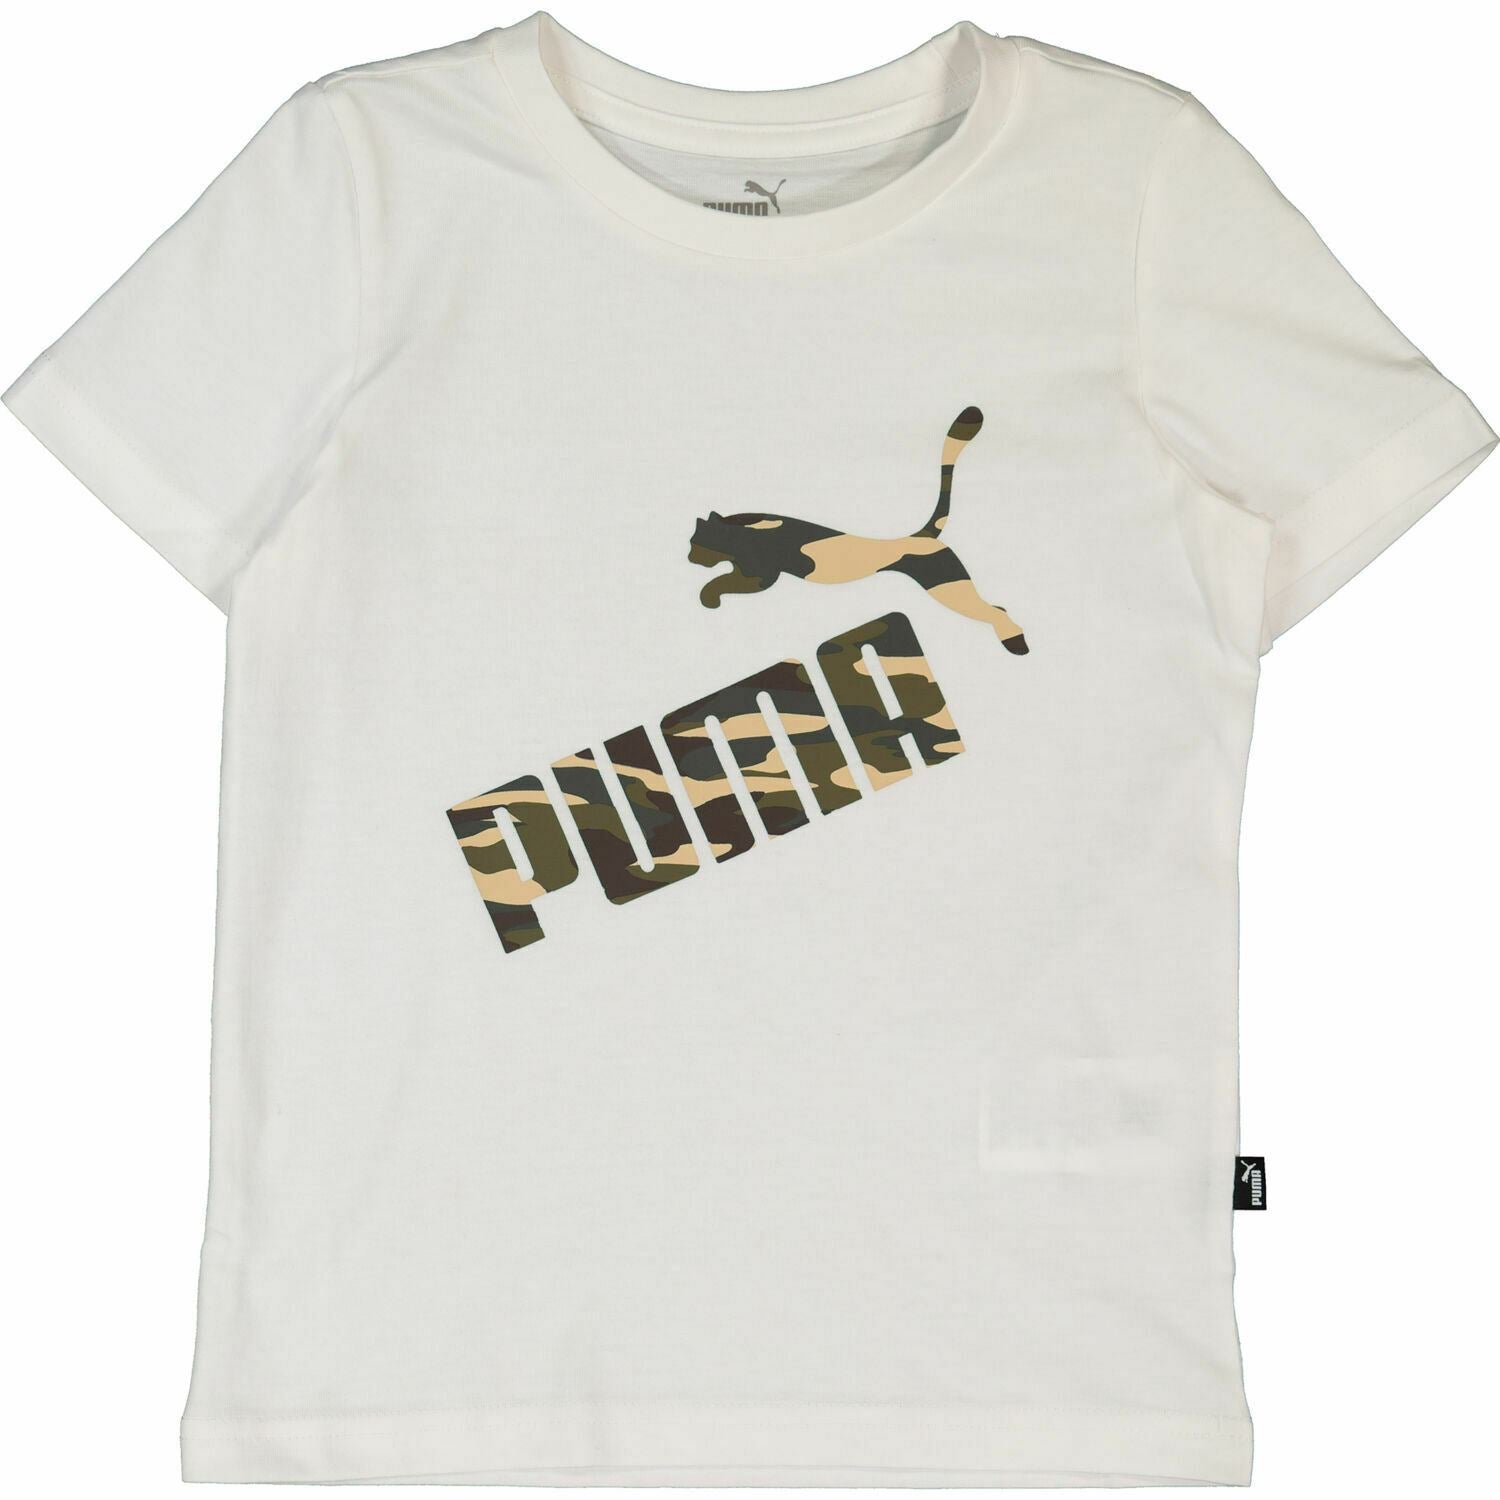 PUMA Boys' Kids' White & Camouflage Logo T-Shirt, 7 y to 8 years